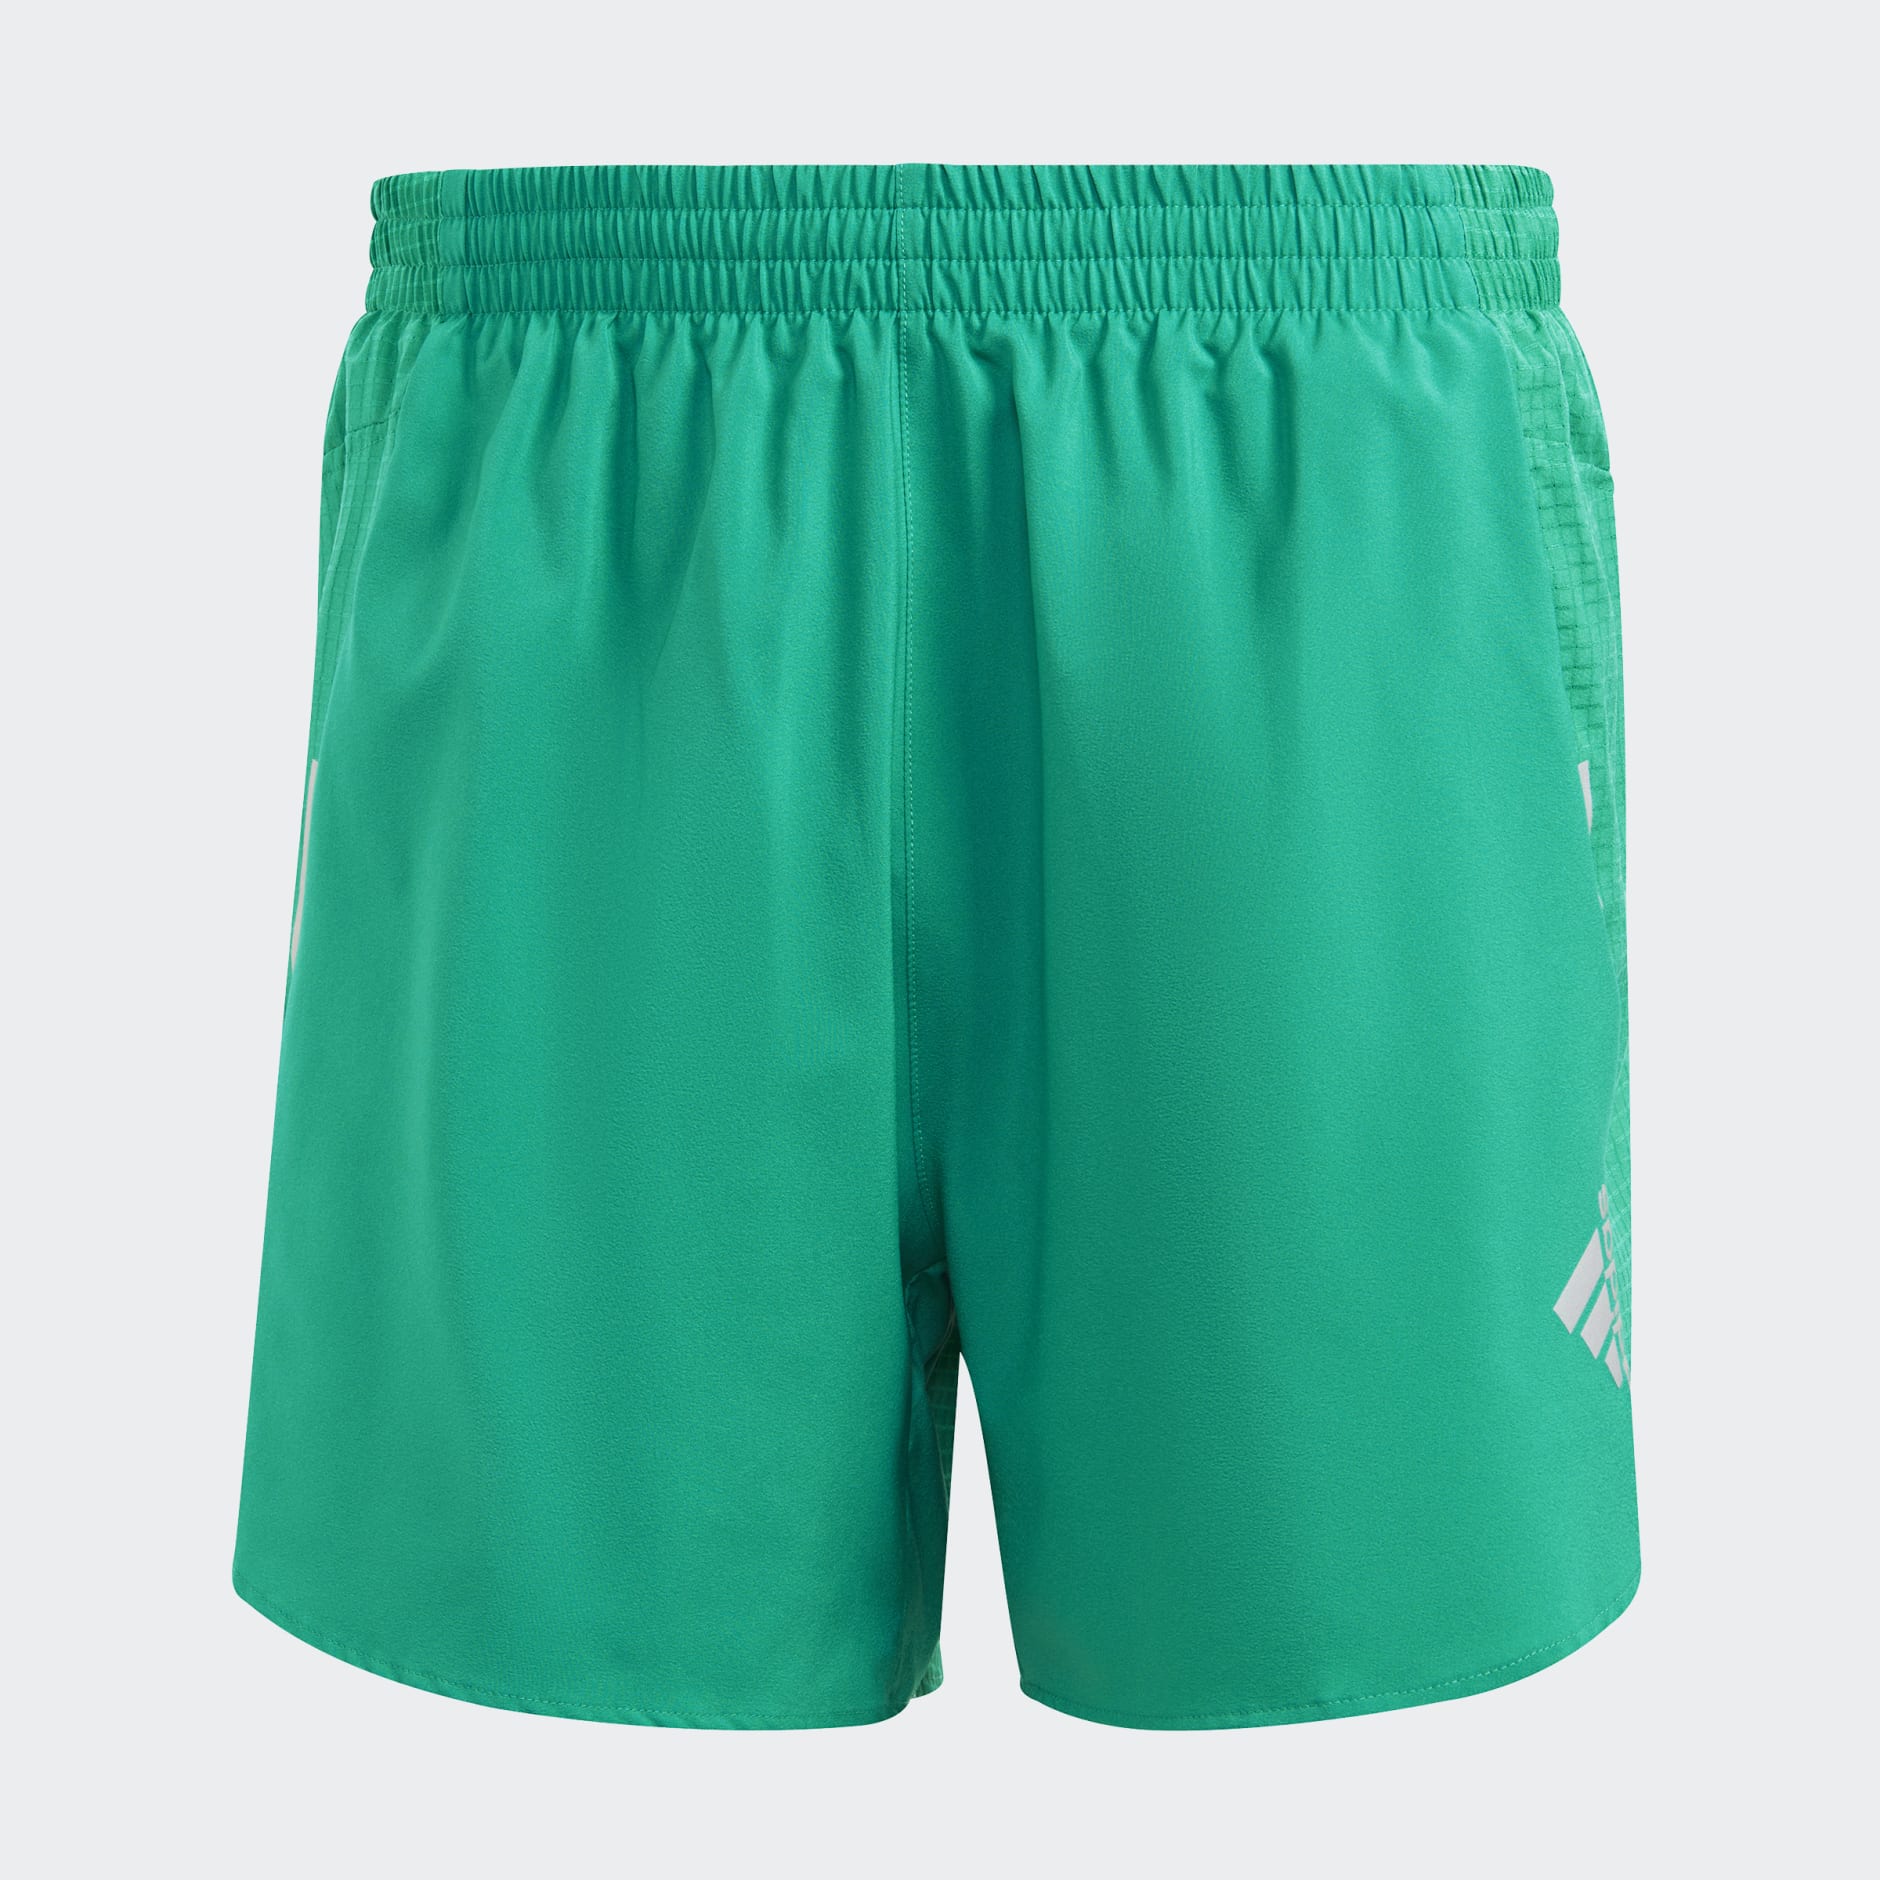 Men's Clothing - Designed 4 Running Shorts - Green | adidas Egypt